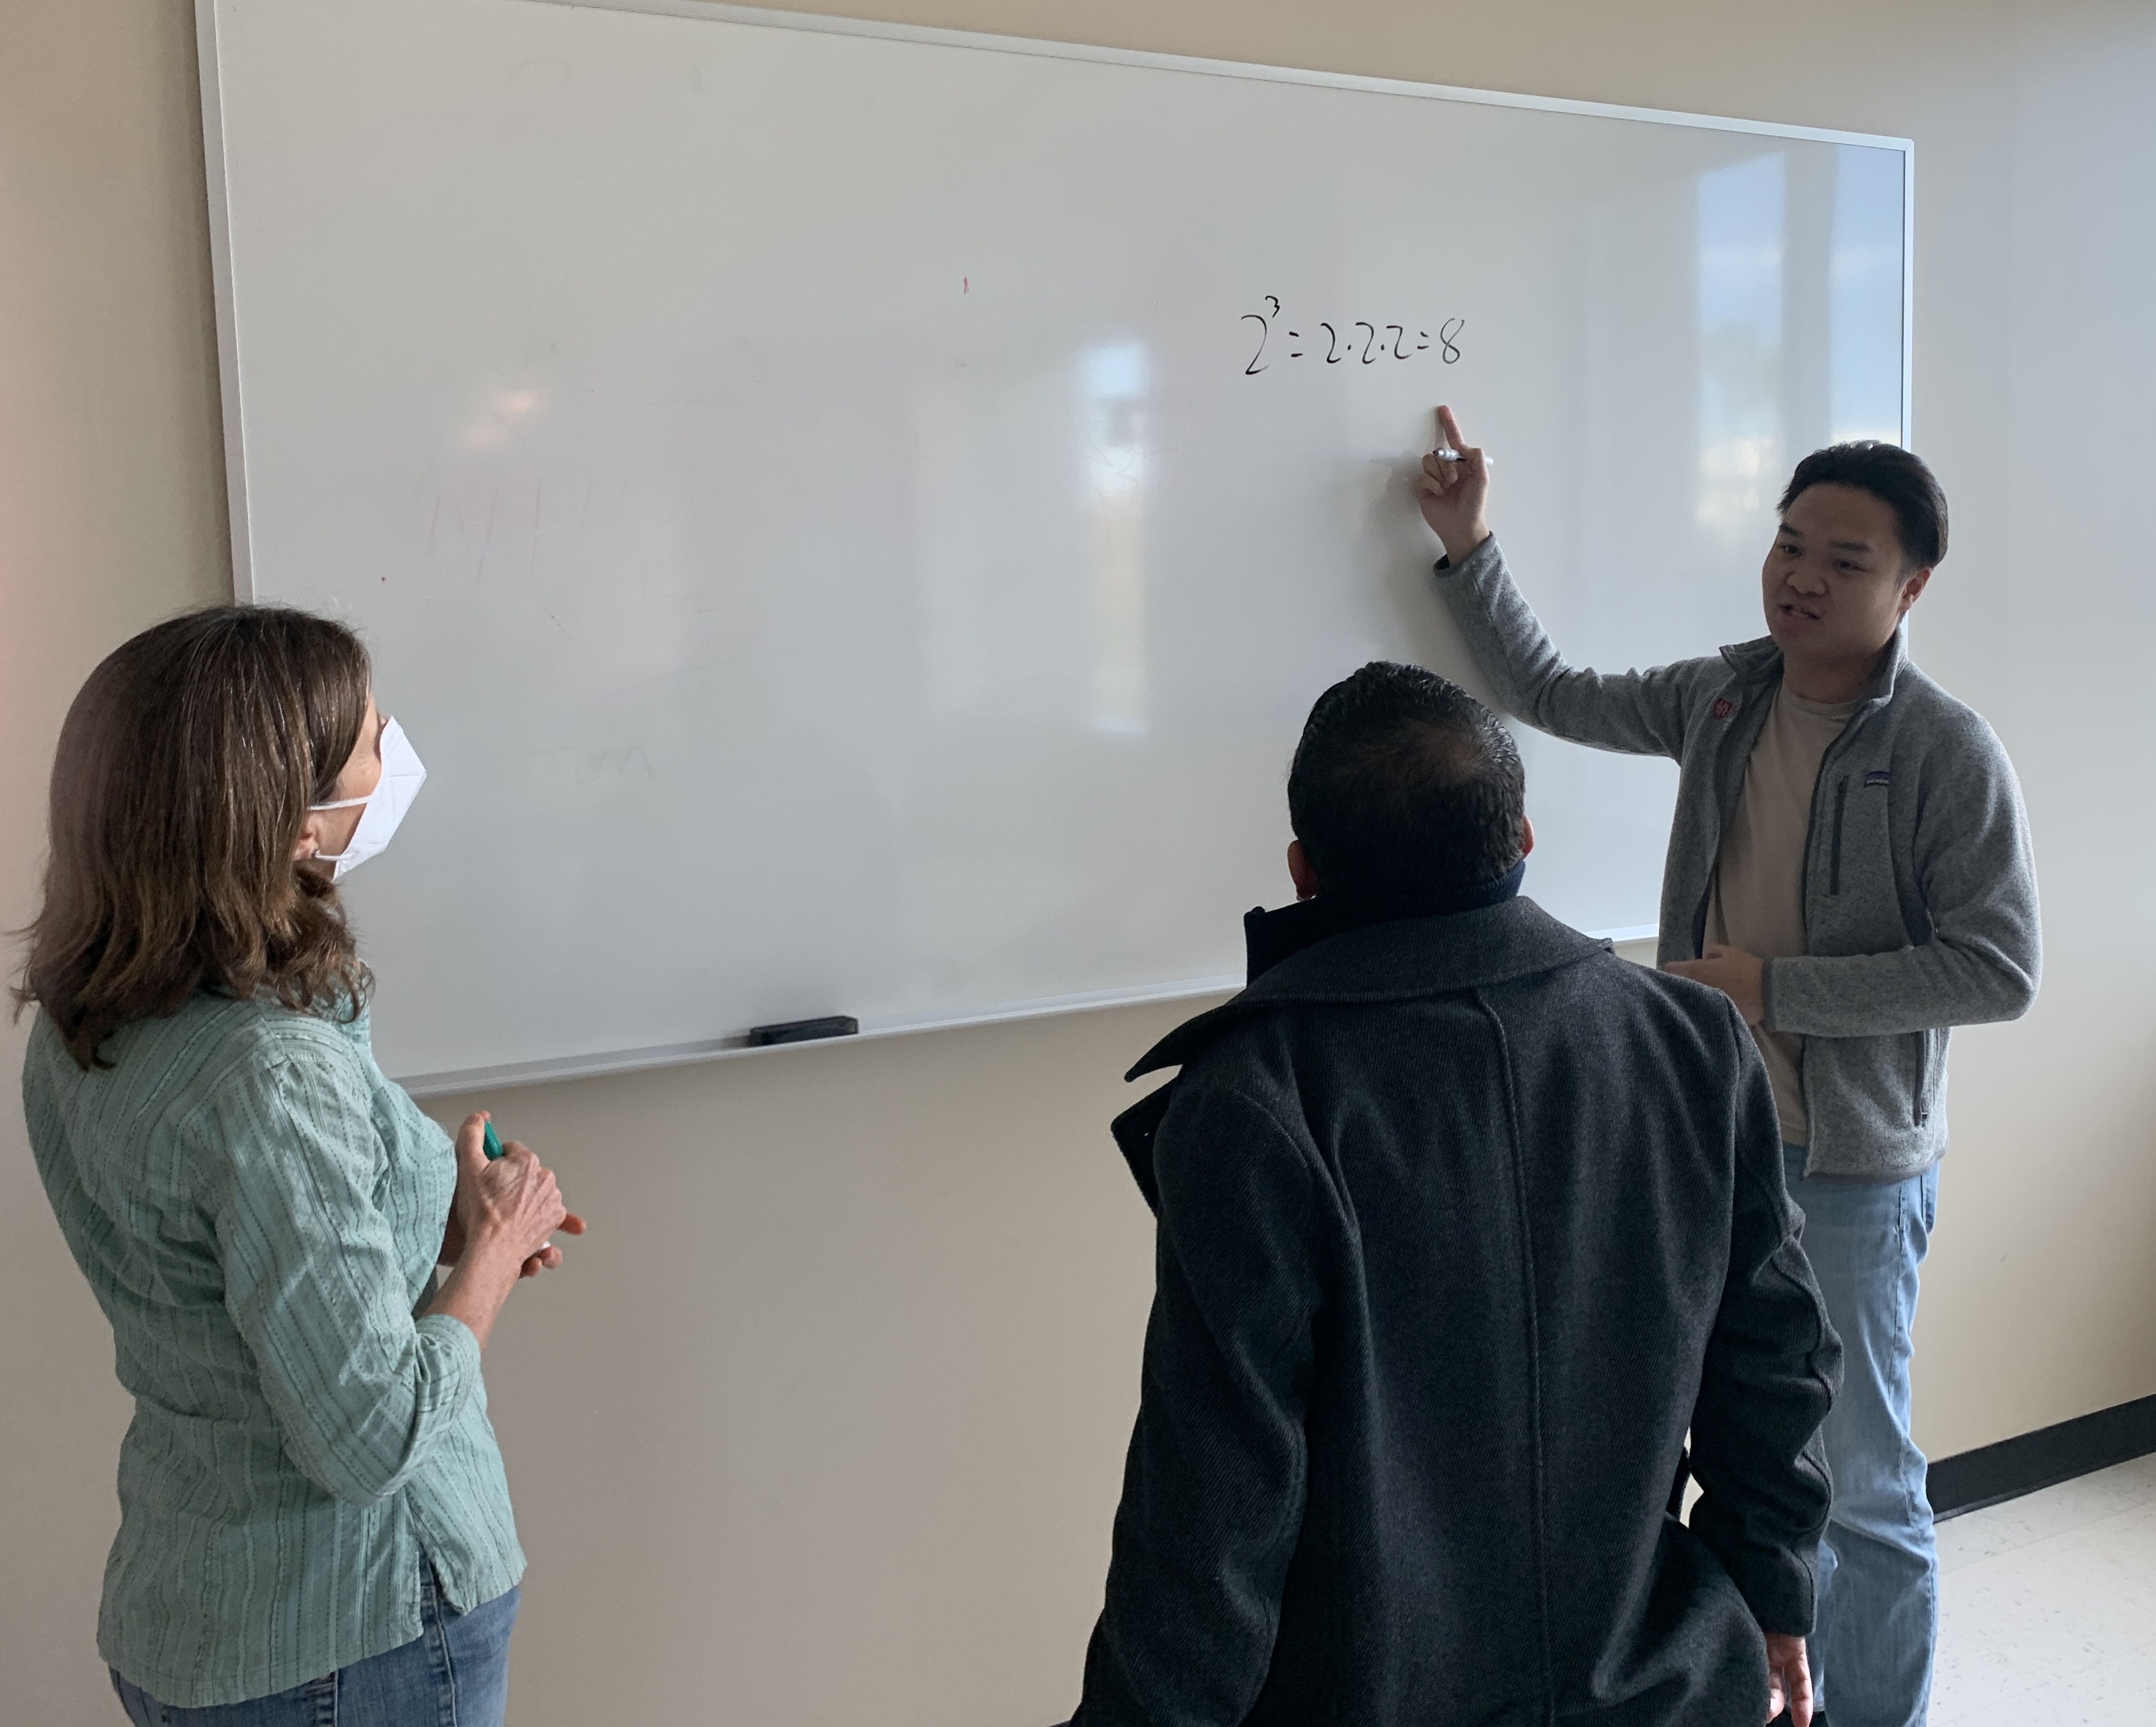 Noyce Fellows Miguel Garcia and Daniel Pham in collaboration with Mathematics Professor Linda Burks at a Noyce Fellowship Workshop.